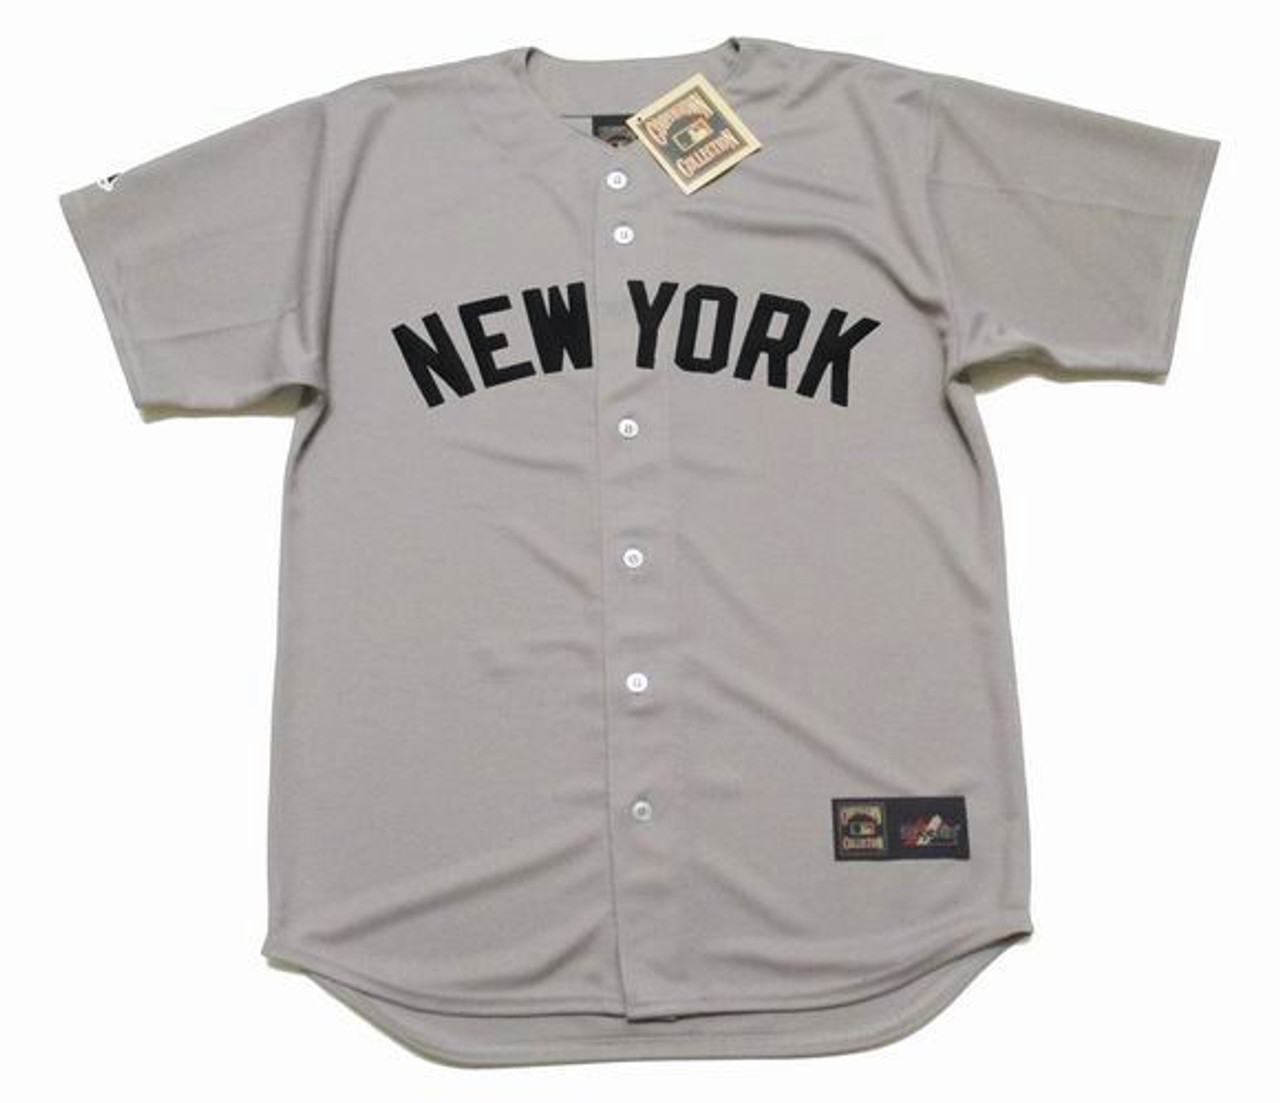 Collectible New York Yankees Jerseys for sale near Edmonton